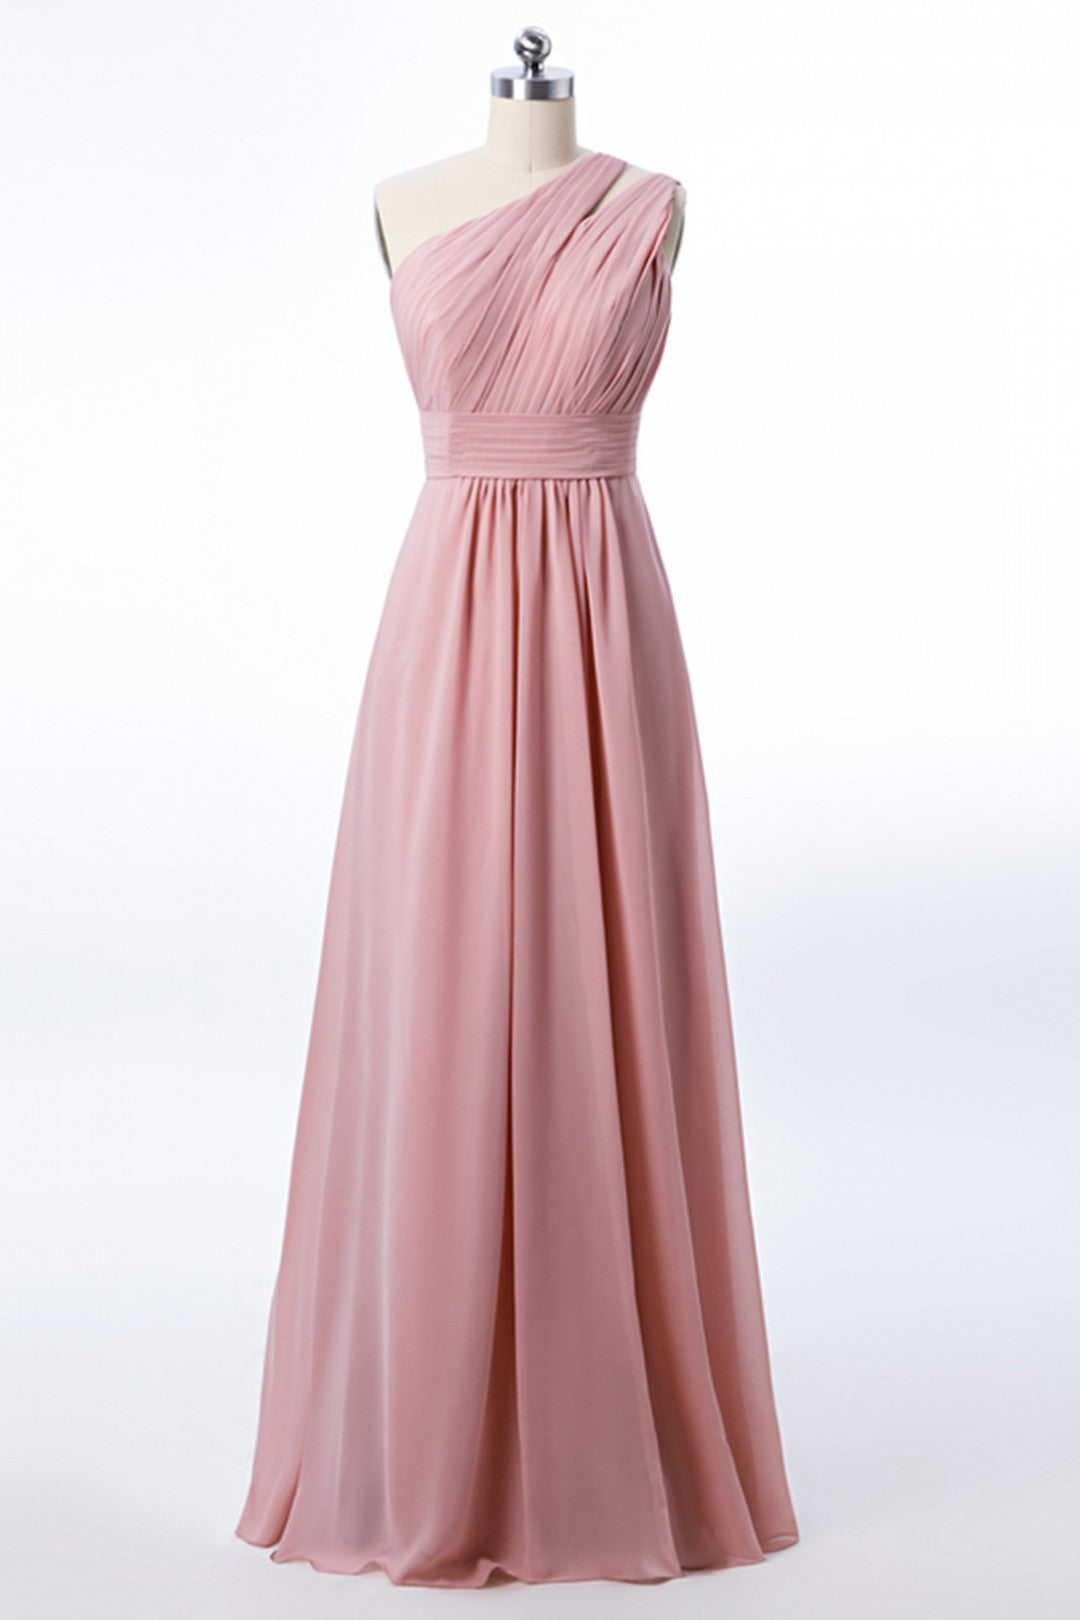 One Shoulder Blush Pink Chiffon A-line Corset Bridesmaid Dress outfit, Prom Dress Pattern